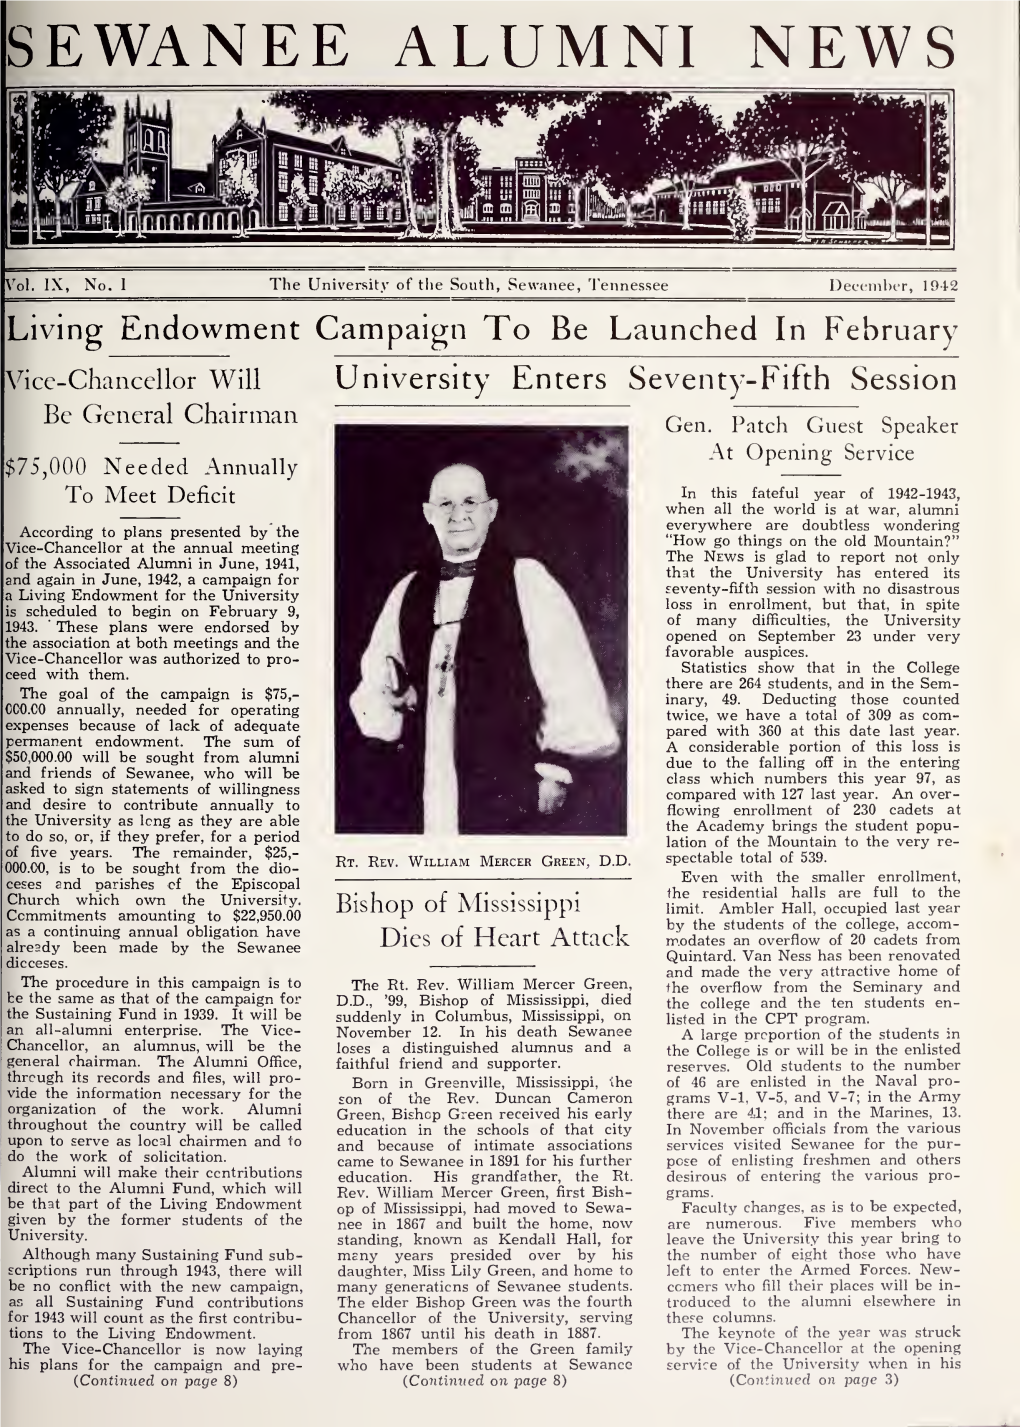 Sewanee Alumni News, 1942-43